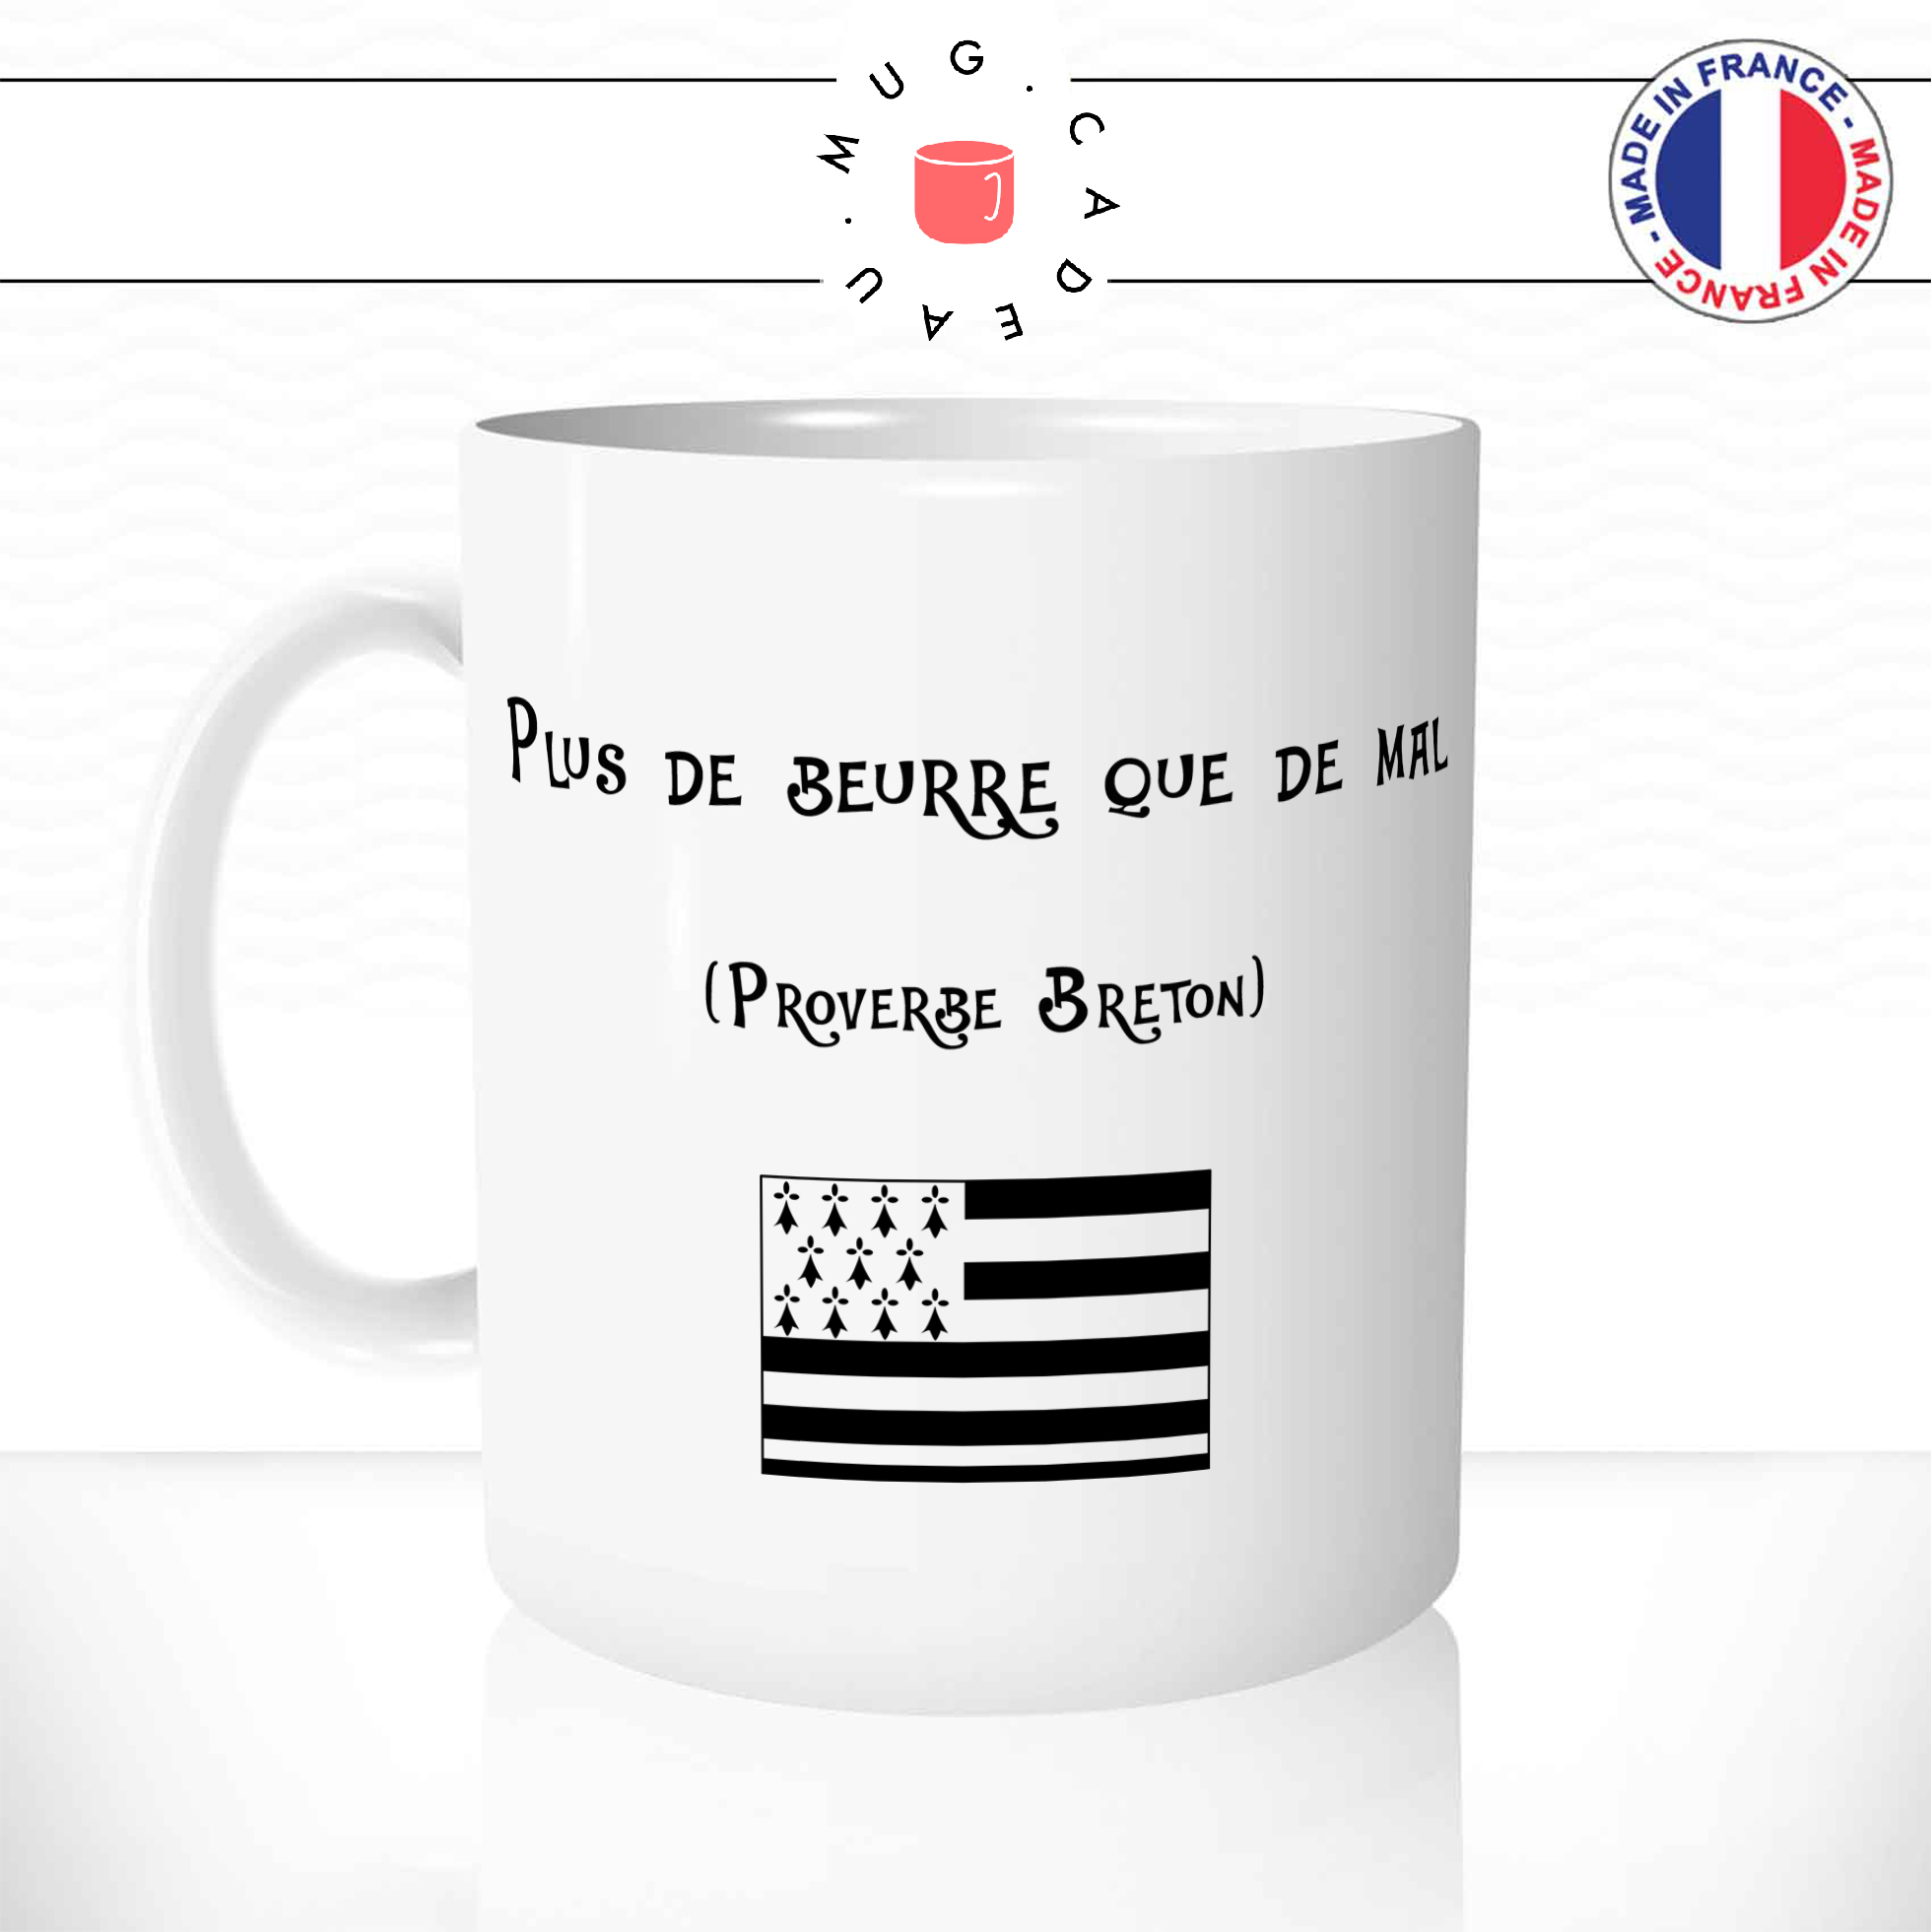 mug-tasse-ref52-citation-drole-beurre-mal-proverbe-breton-bretagne-cafe-the-mugs-tasses-personnalise-anse-gauche